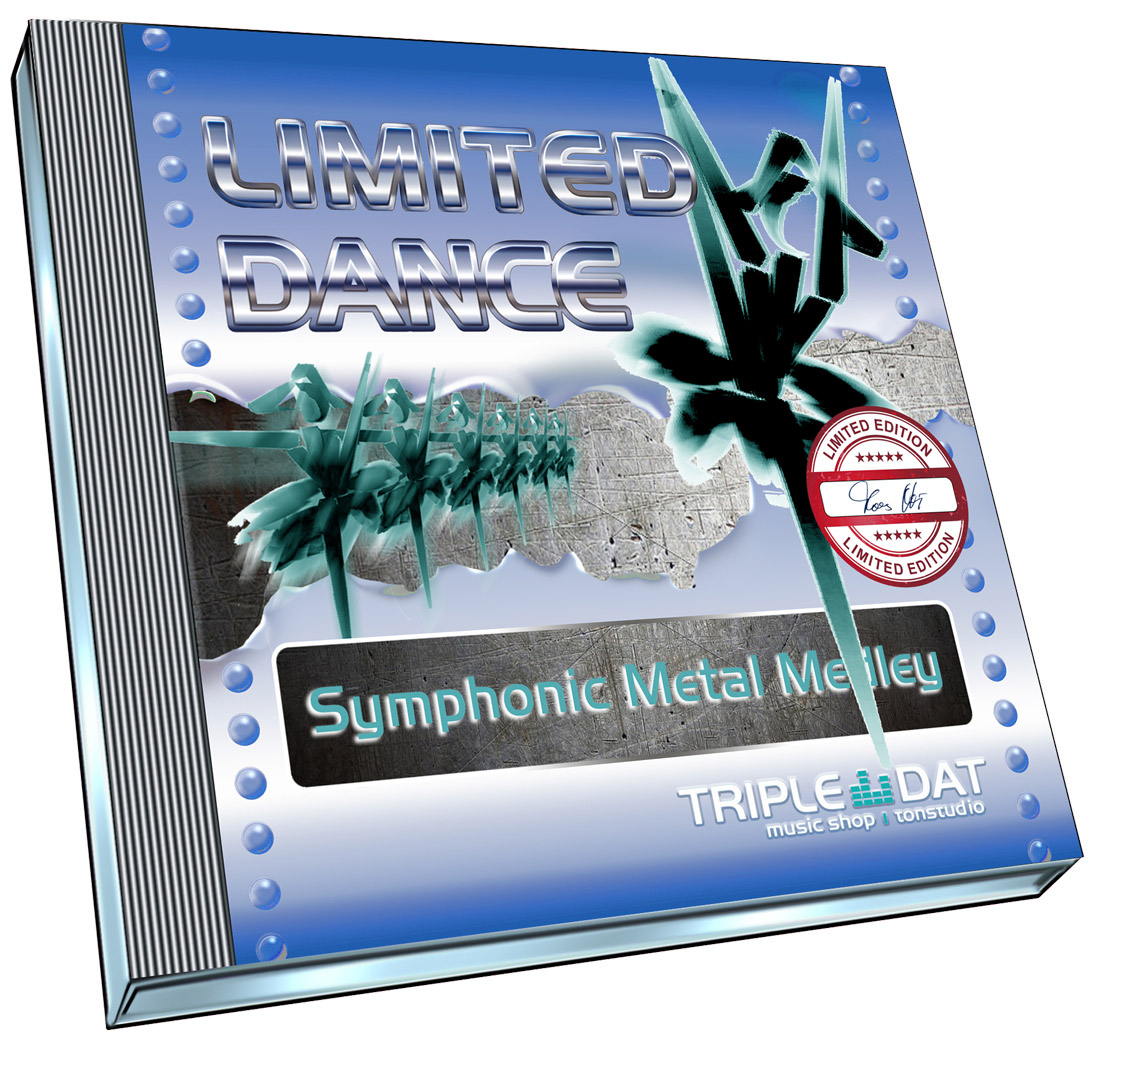 Limited Dance - Symphonic Metal Medley - Download